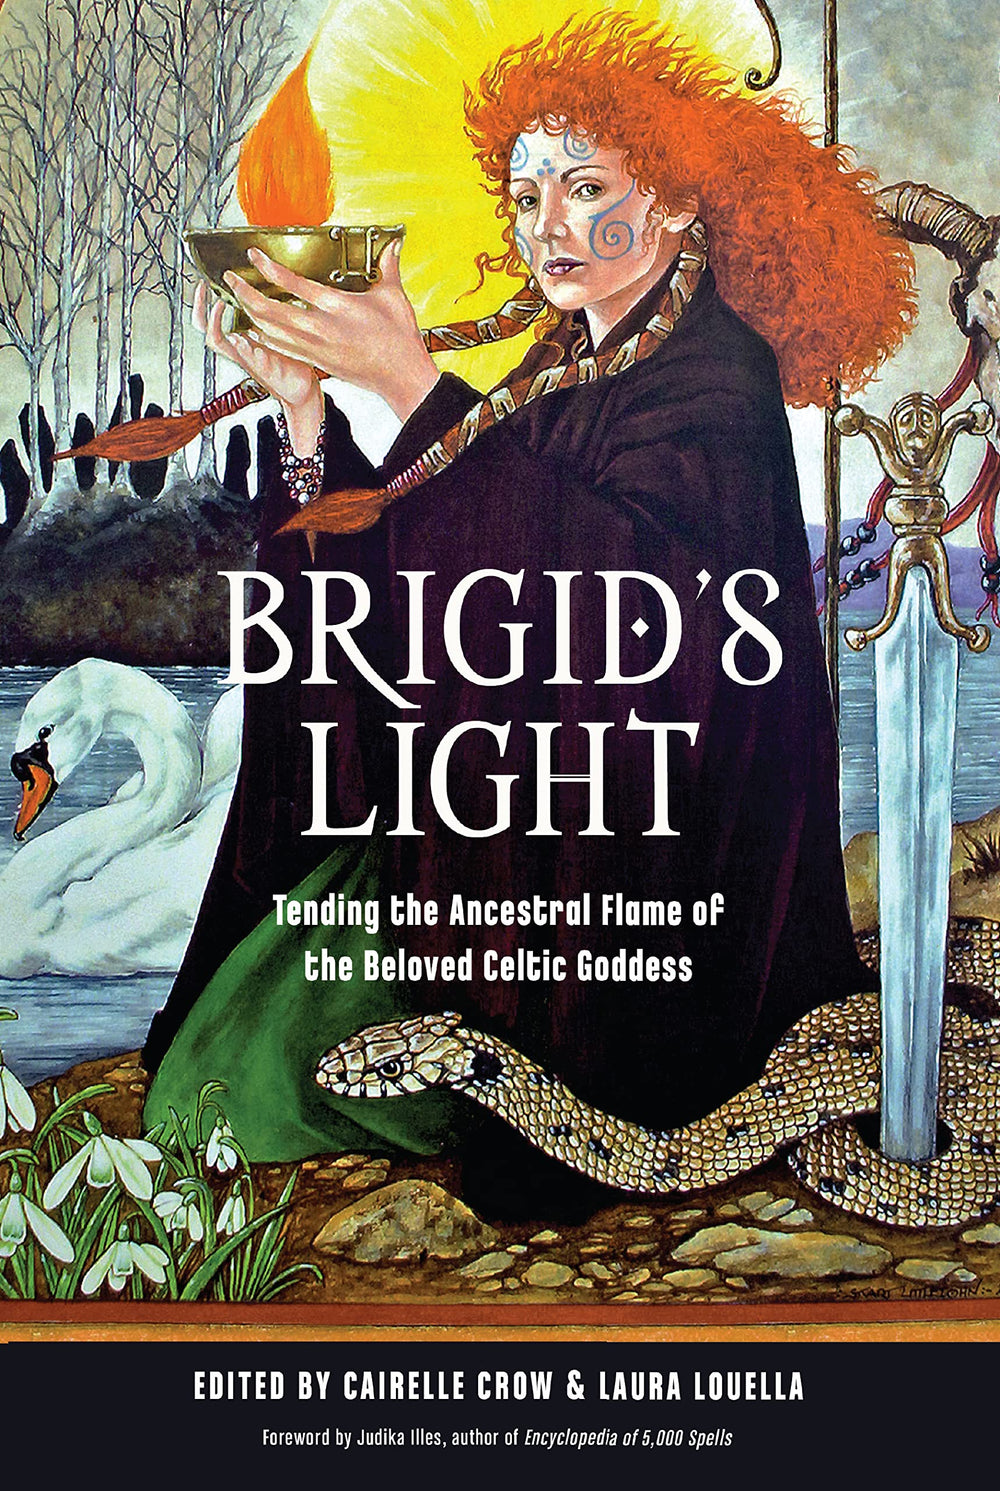 Brigid's Light: Tending the Ancestral Flame of the Beloved Celtic Goddess